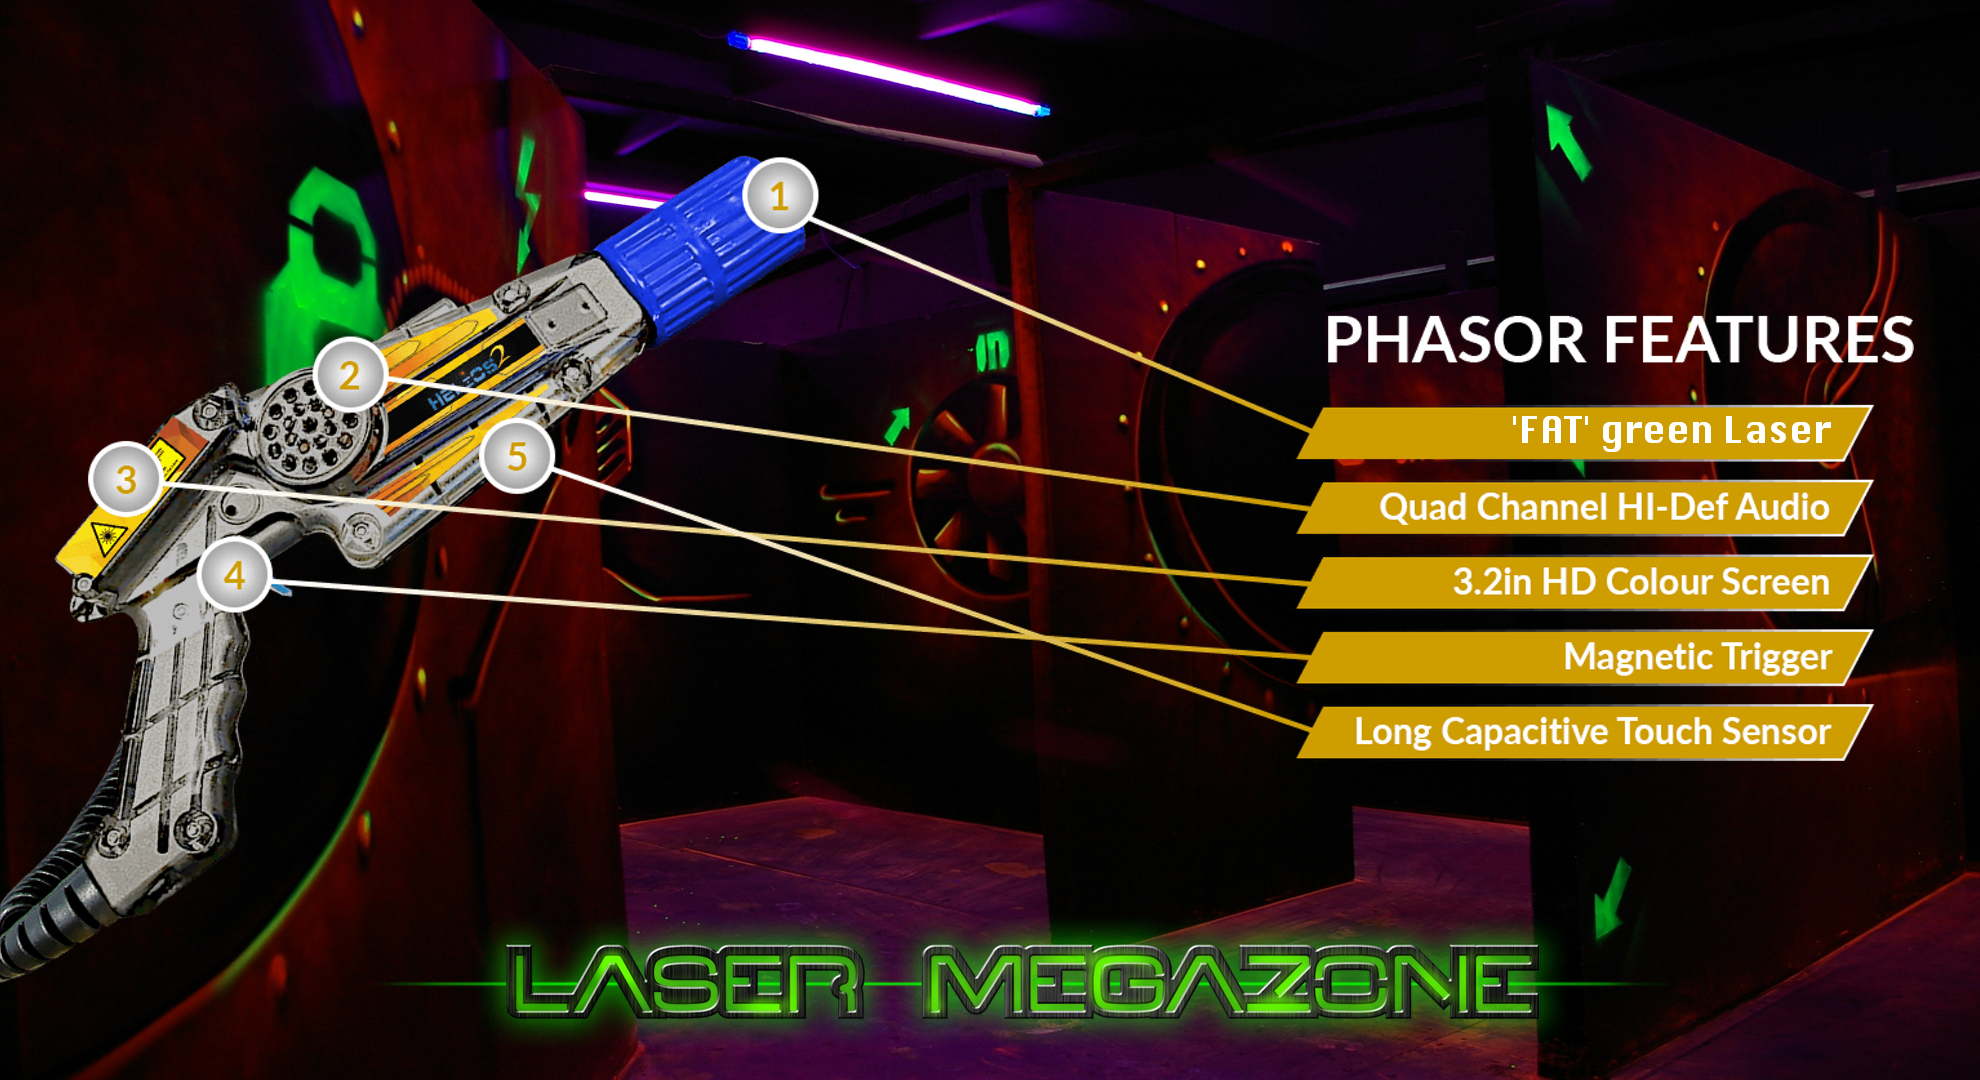 Tag - Laser Megazone